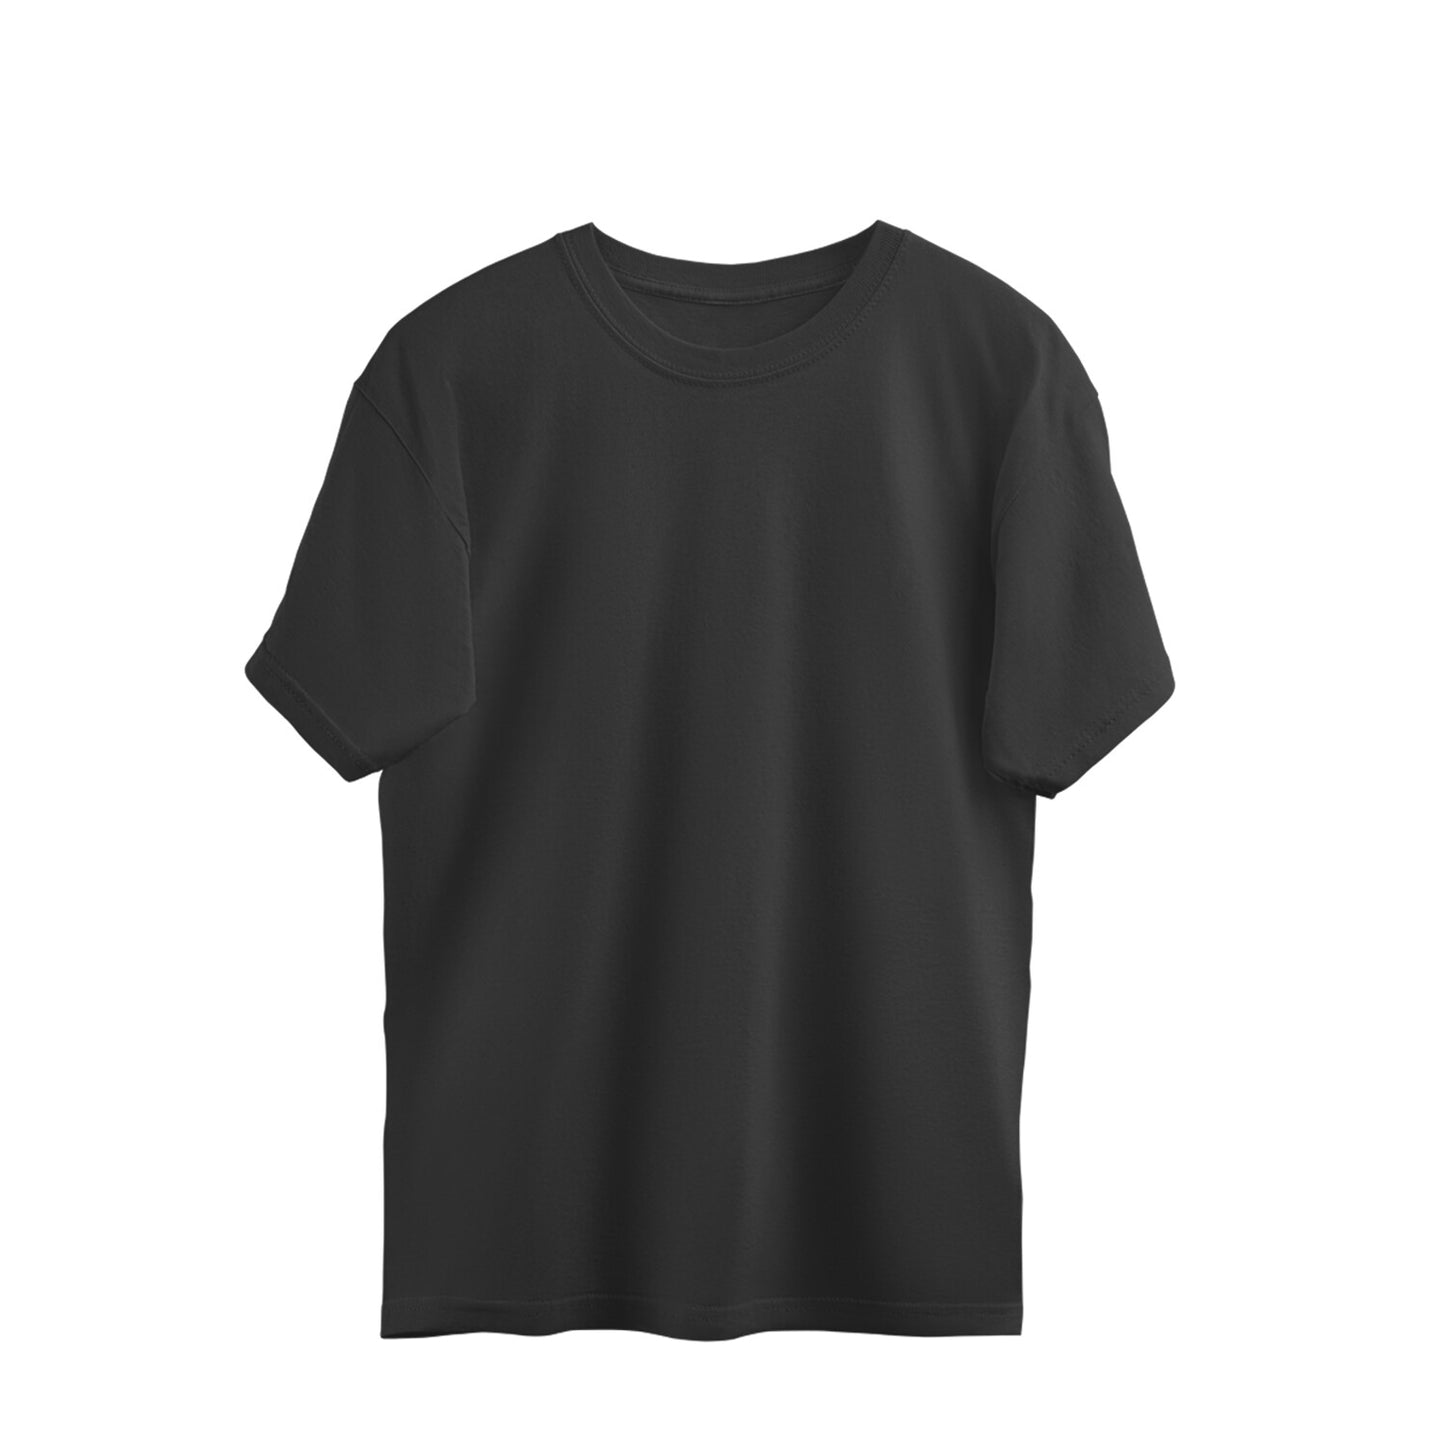 Bilkool Solids Oversized T-Shirts